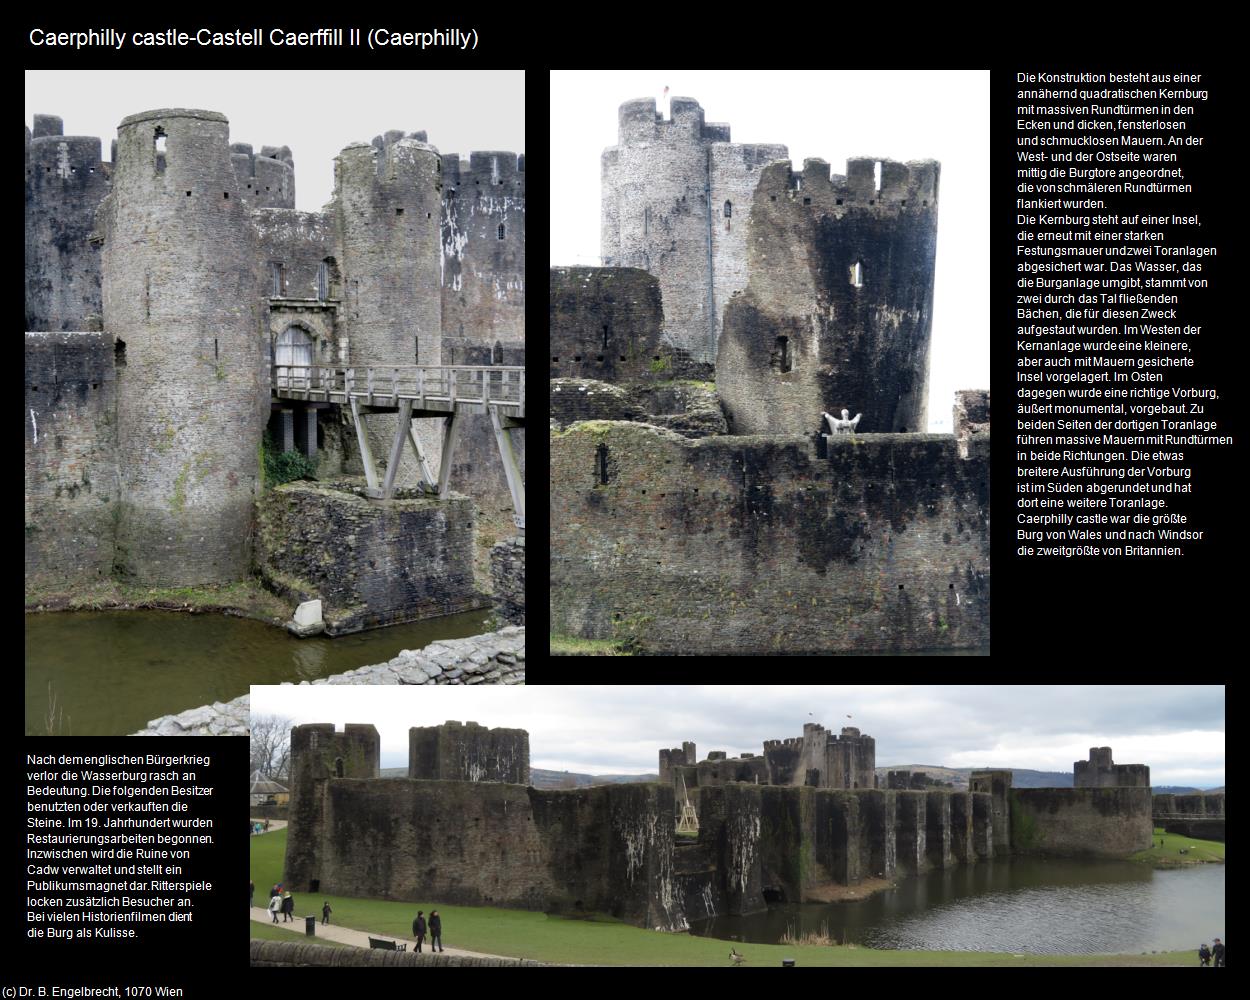 Caerphilly castle II (Caerphilly, Wales) in Kulturatlas-ENGLAND und WALES